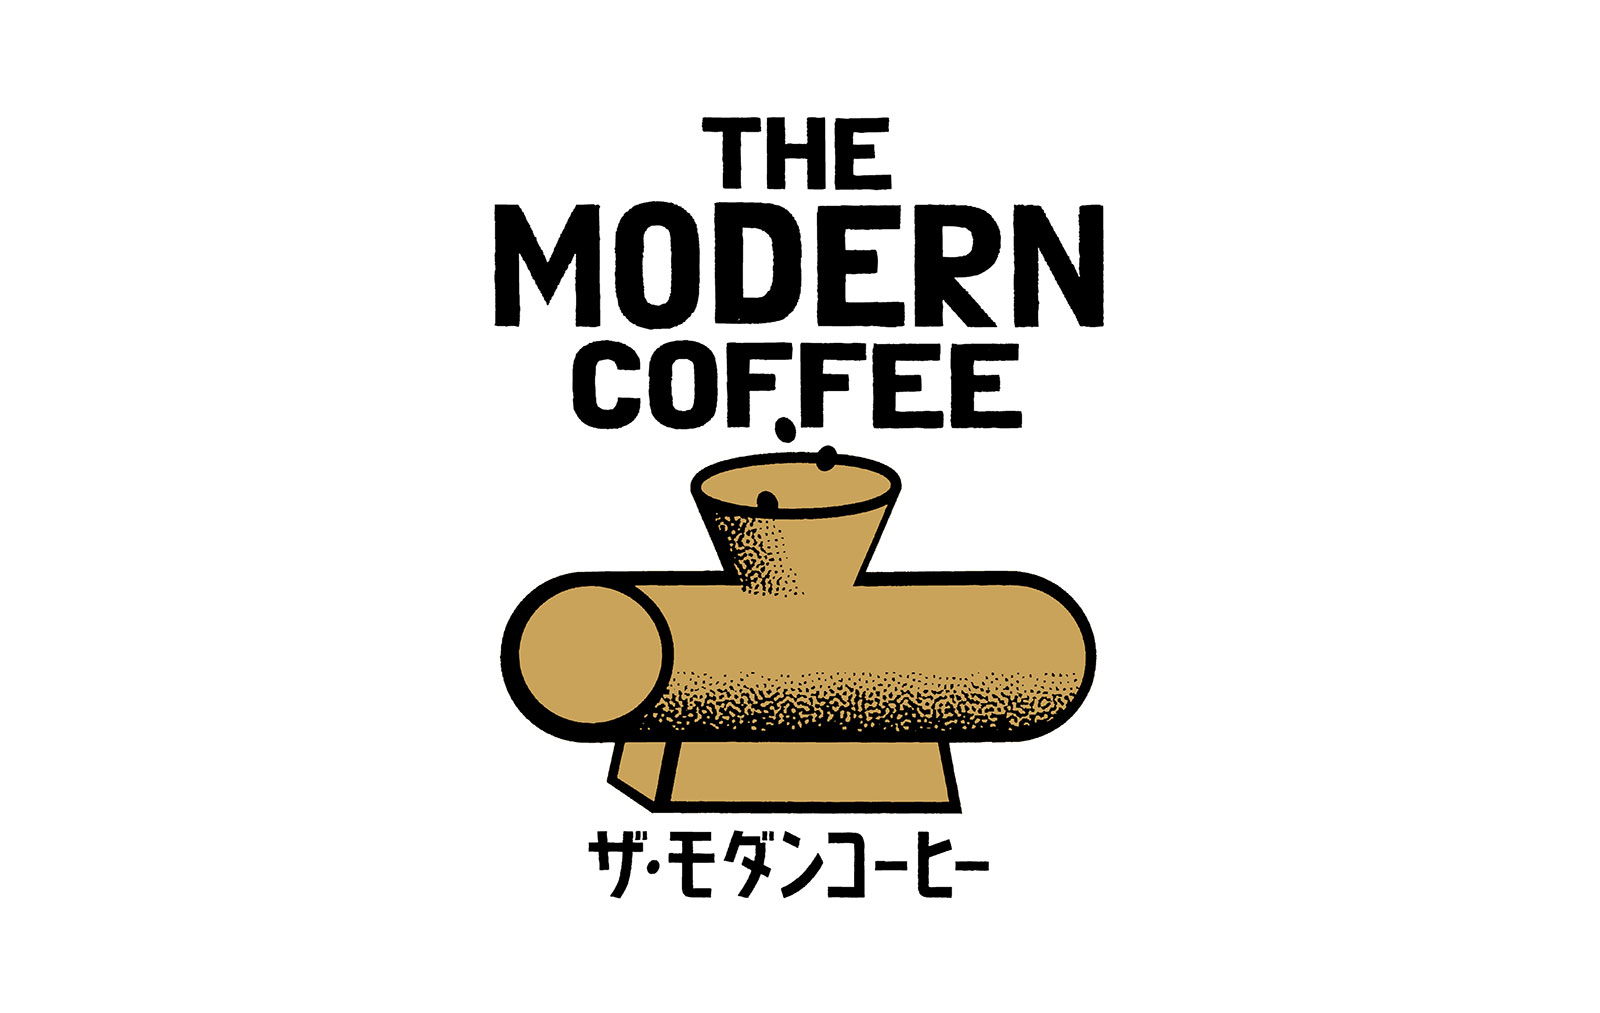 The Modern Coffee